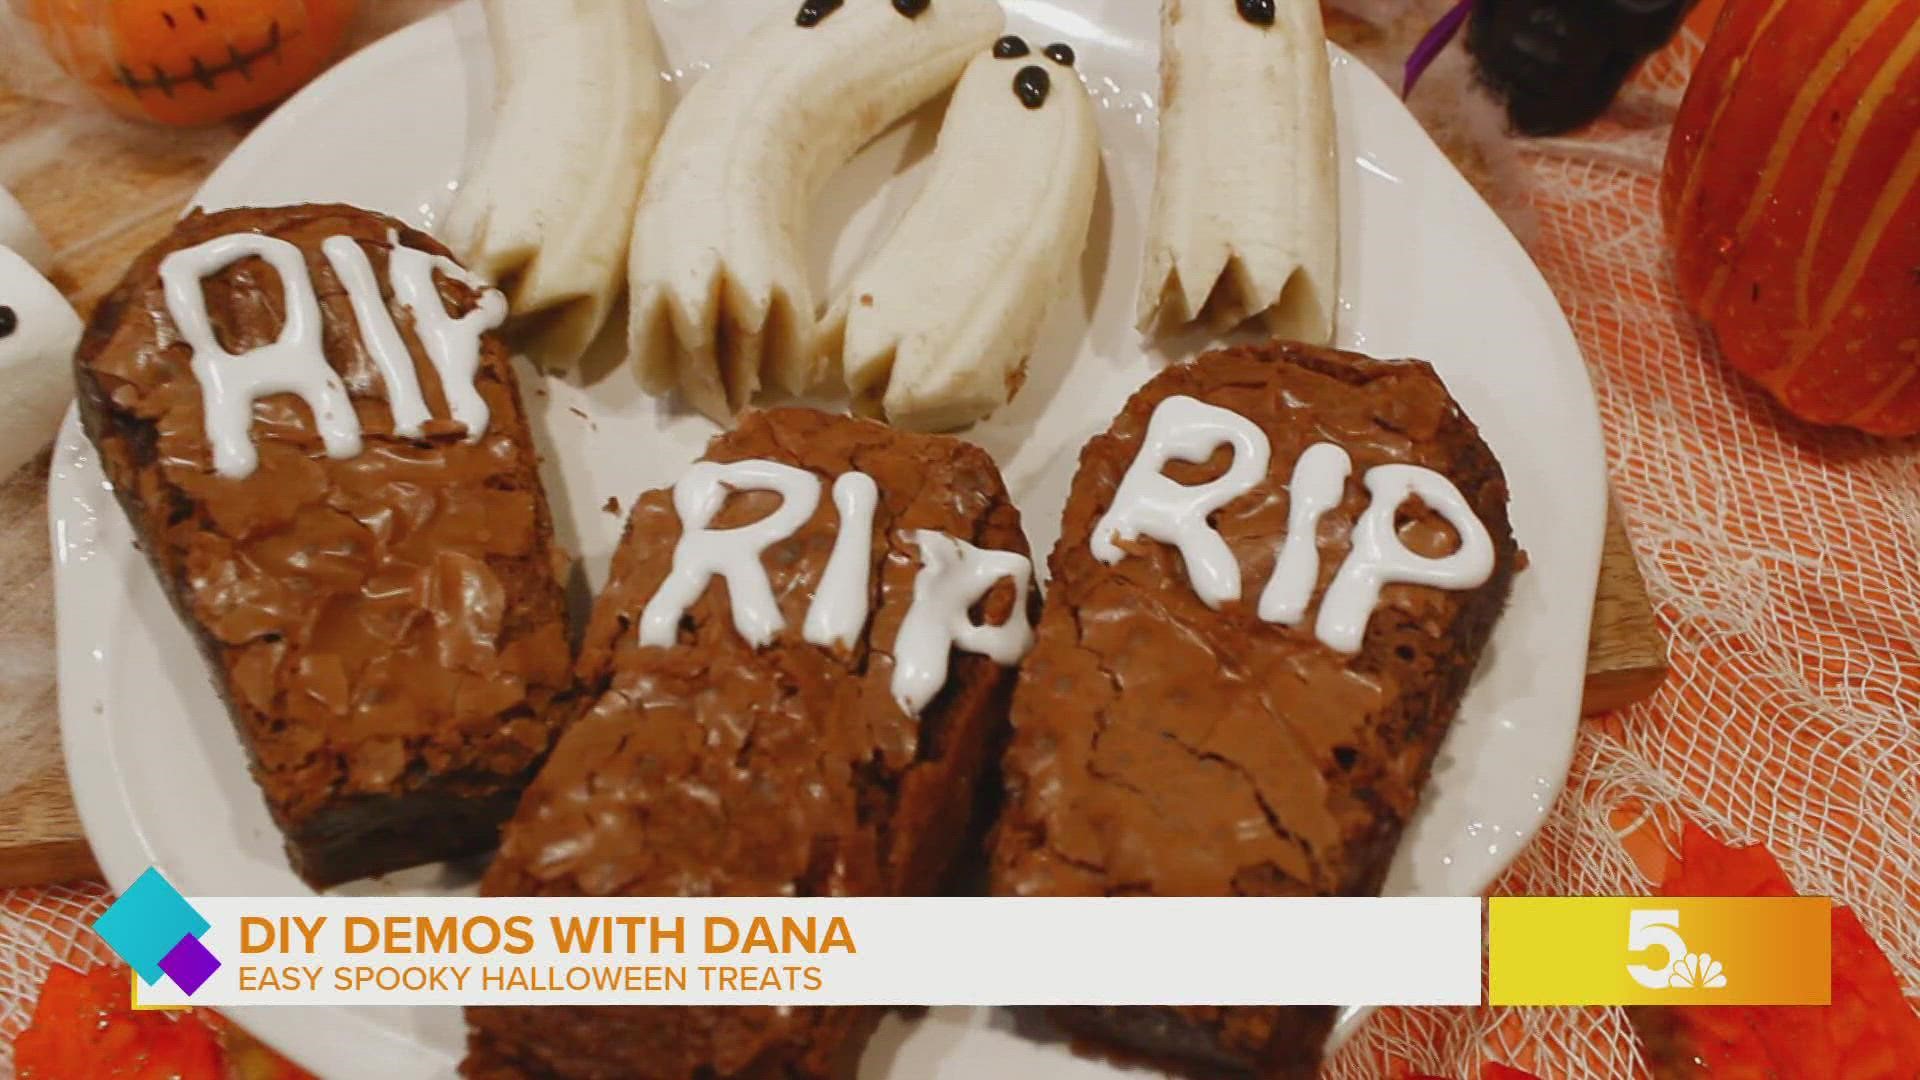 DIY Dana DiPiazza shares some fun ways to celebrate the spooky season in an inexpensive way.